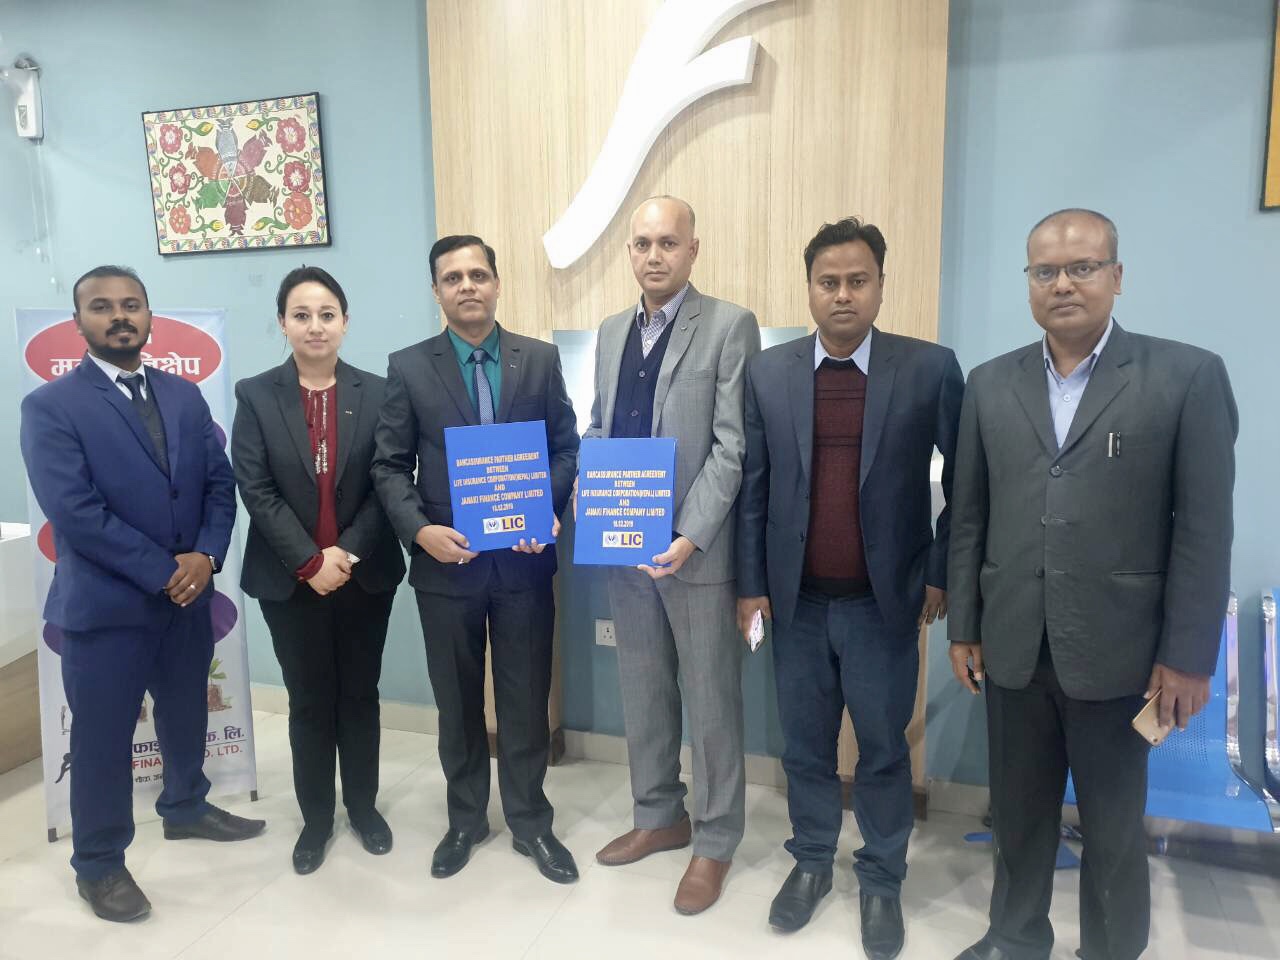 एलआईसी नेपाल र जानकी फाइनान्स  बीच बीमा सेवा सम्झौता